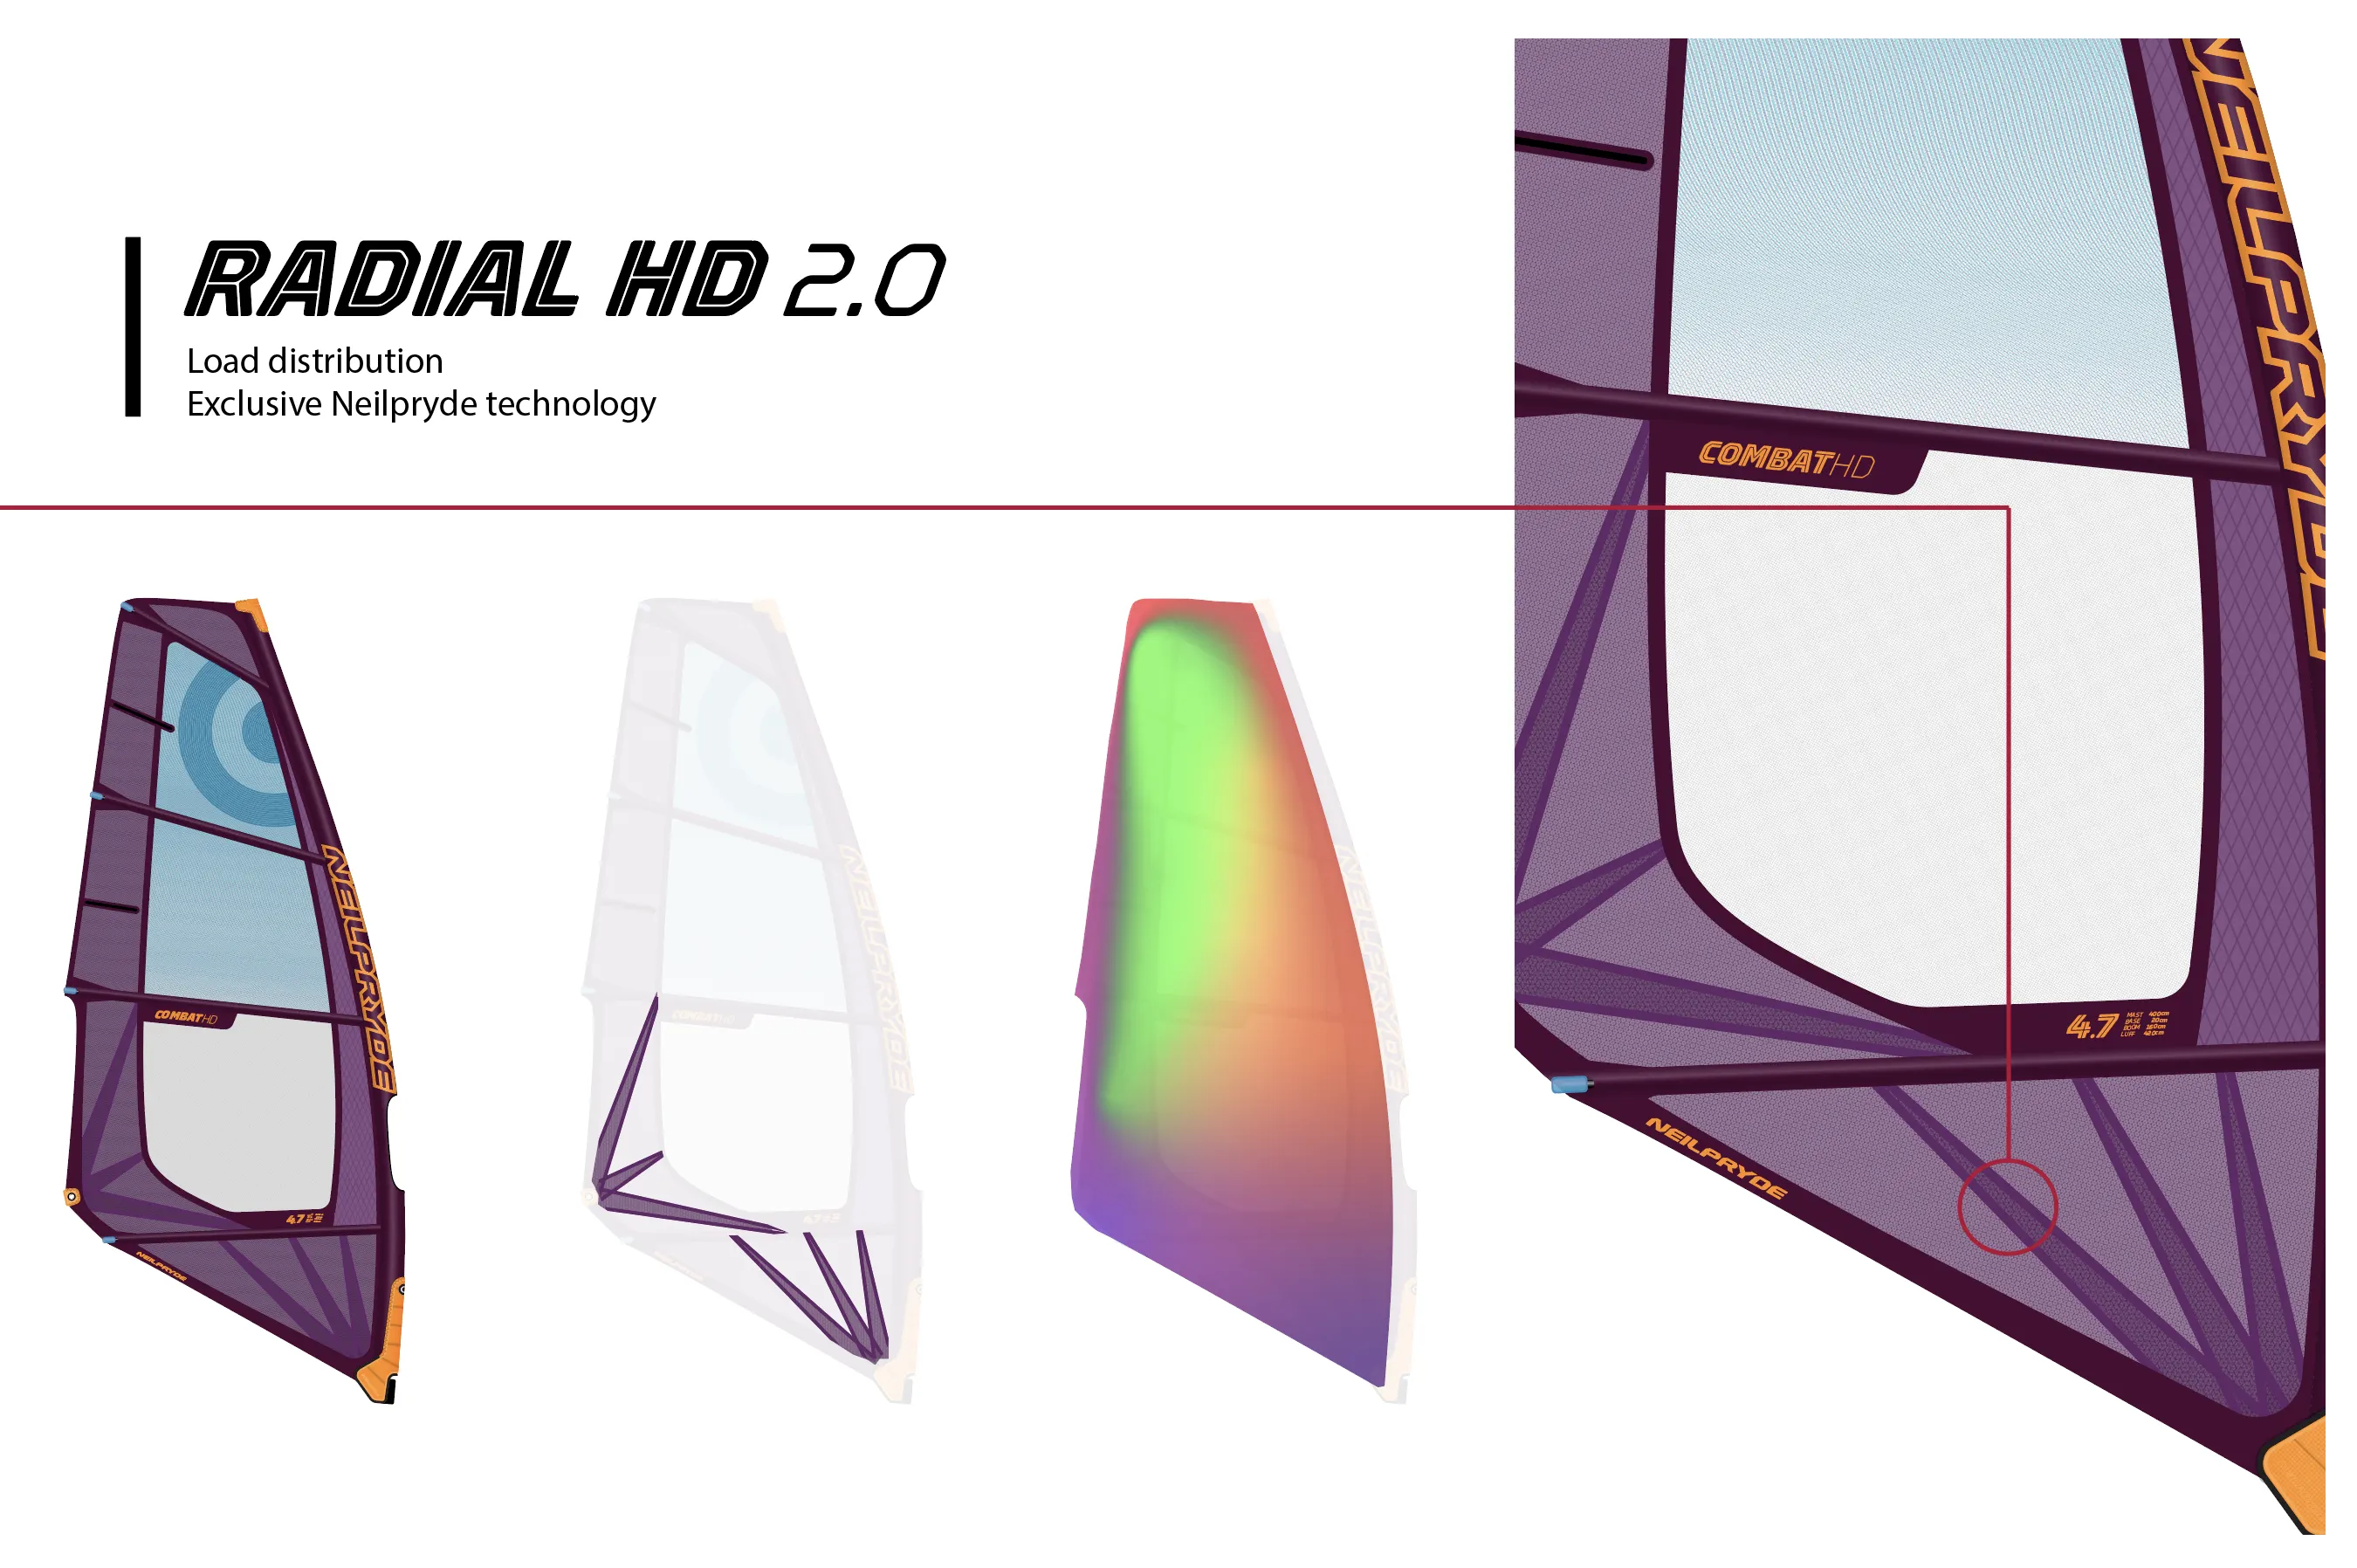 Radial HD 2.0